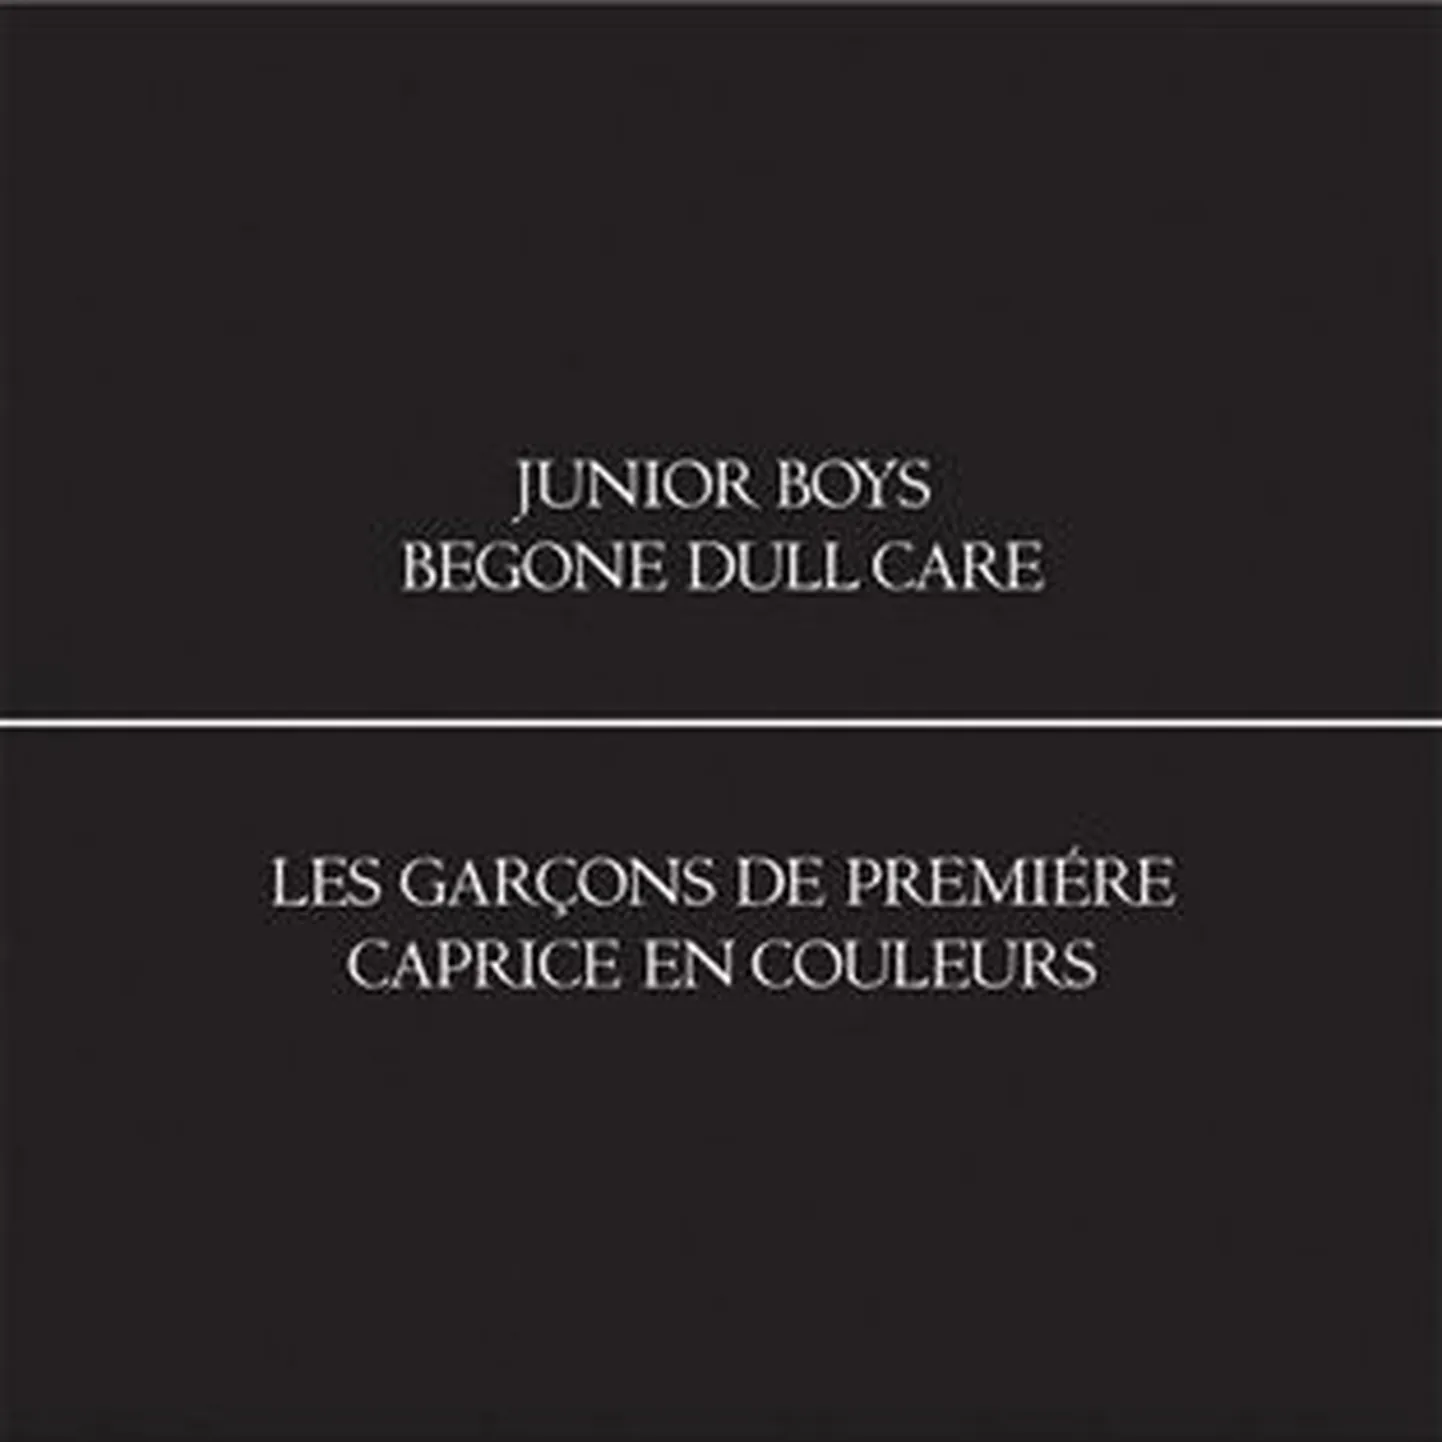 Junior Boys “Begone Dull Care”.